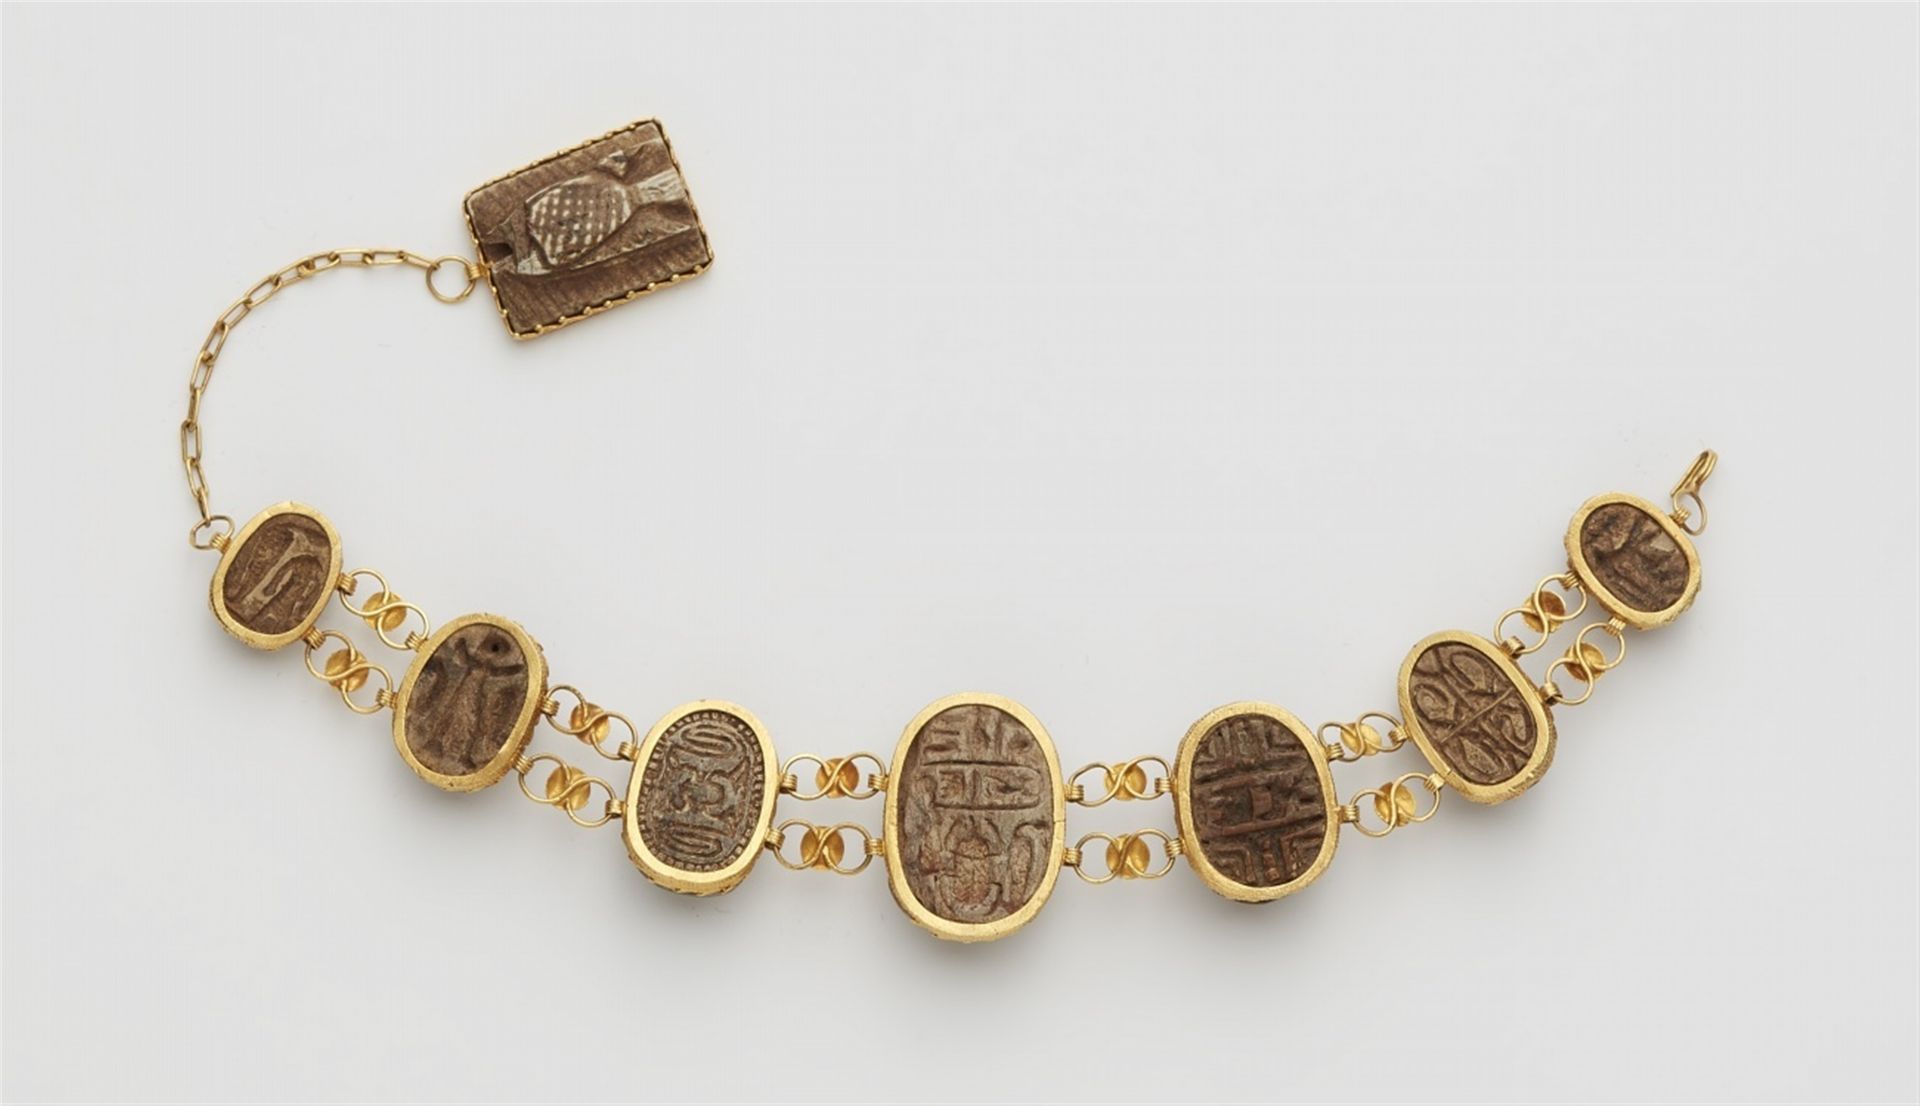 Armband mit antiken Skarabäen - Bild 2 aus 2